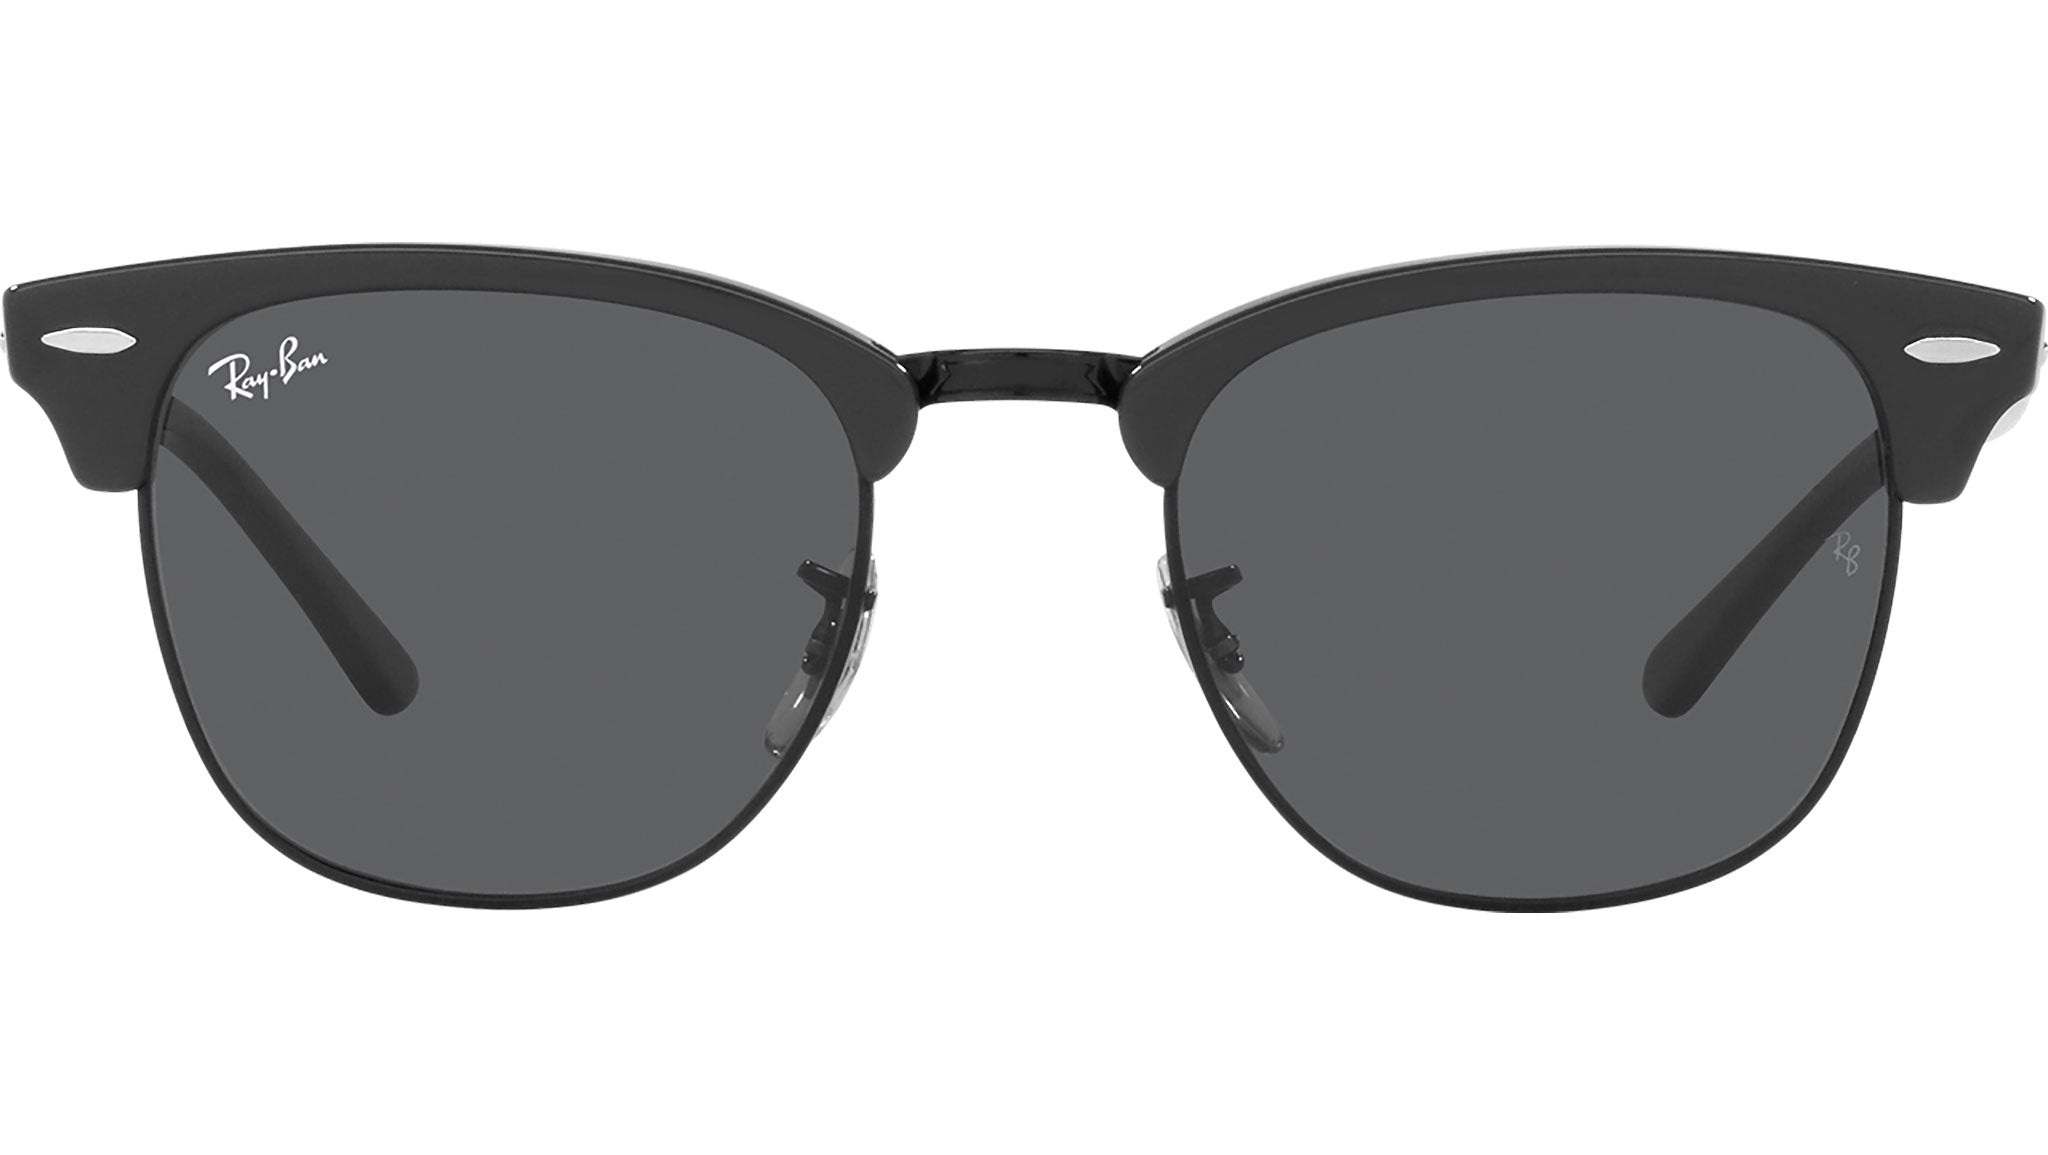 Ray-Ban Clubmaster RB3016 1367B1 Grey Sunglasses